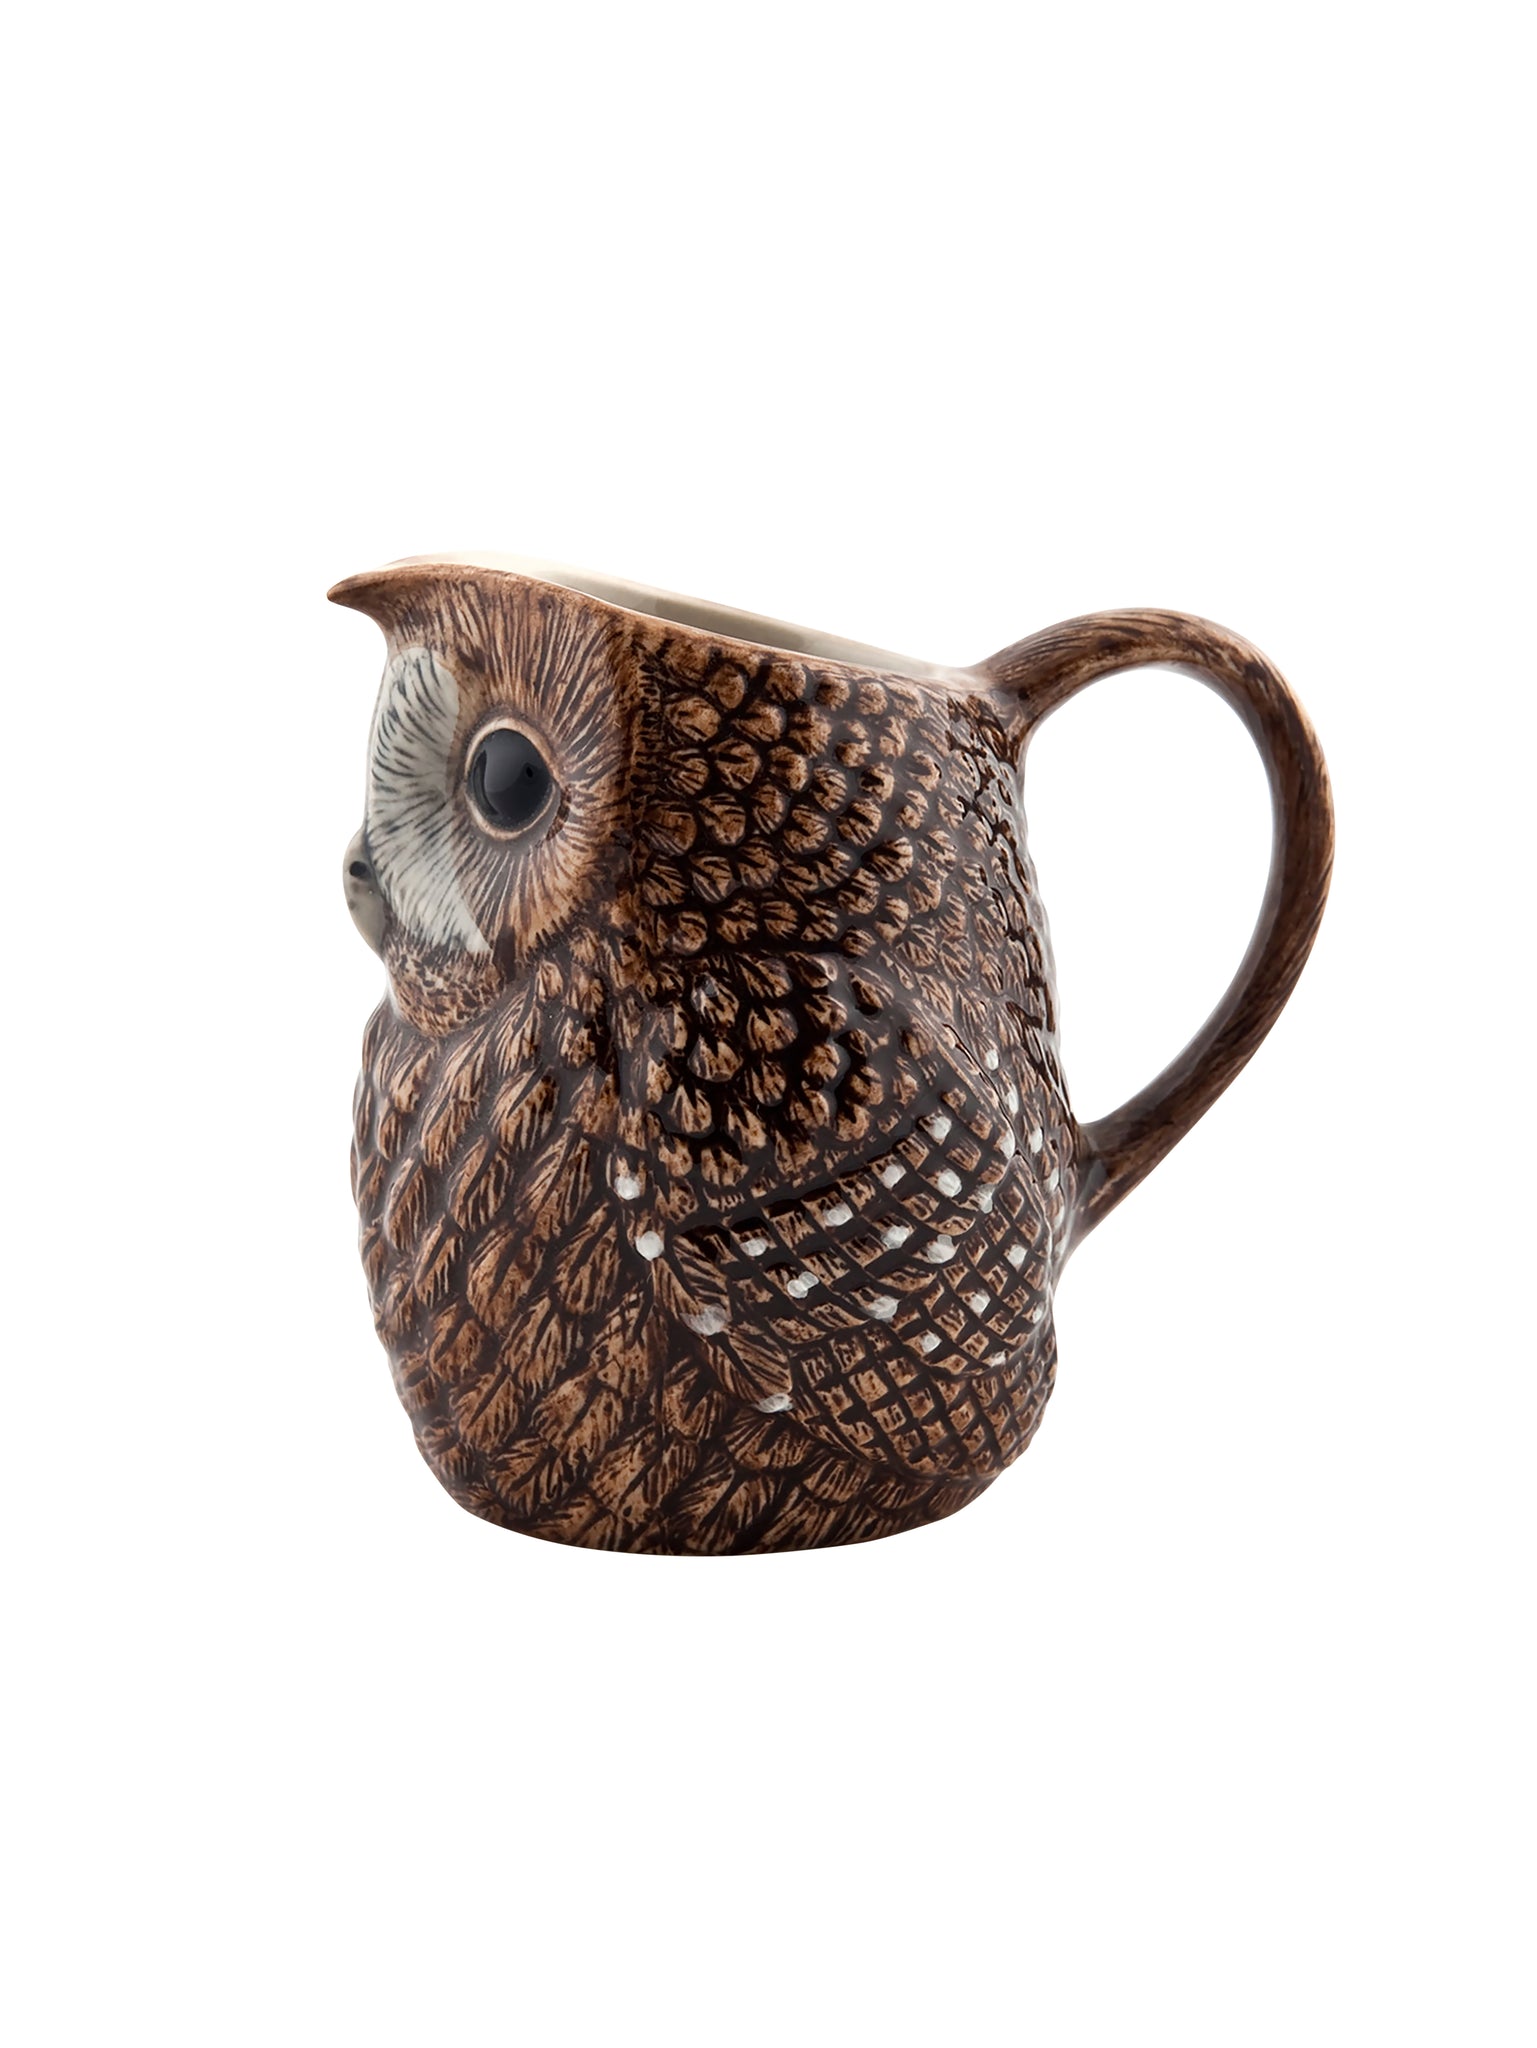 Quail Ceramics Tawny Owl Jug Weston Table